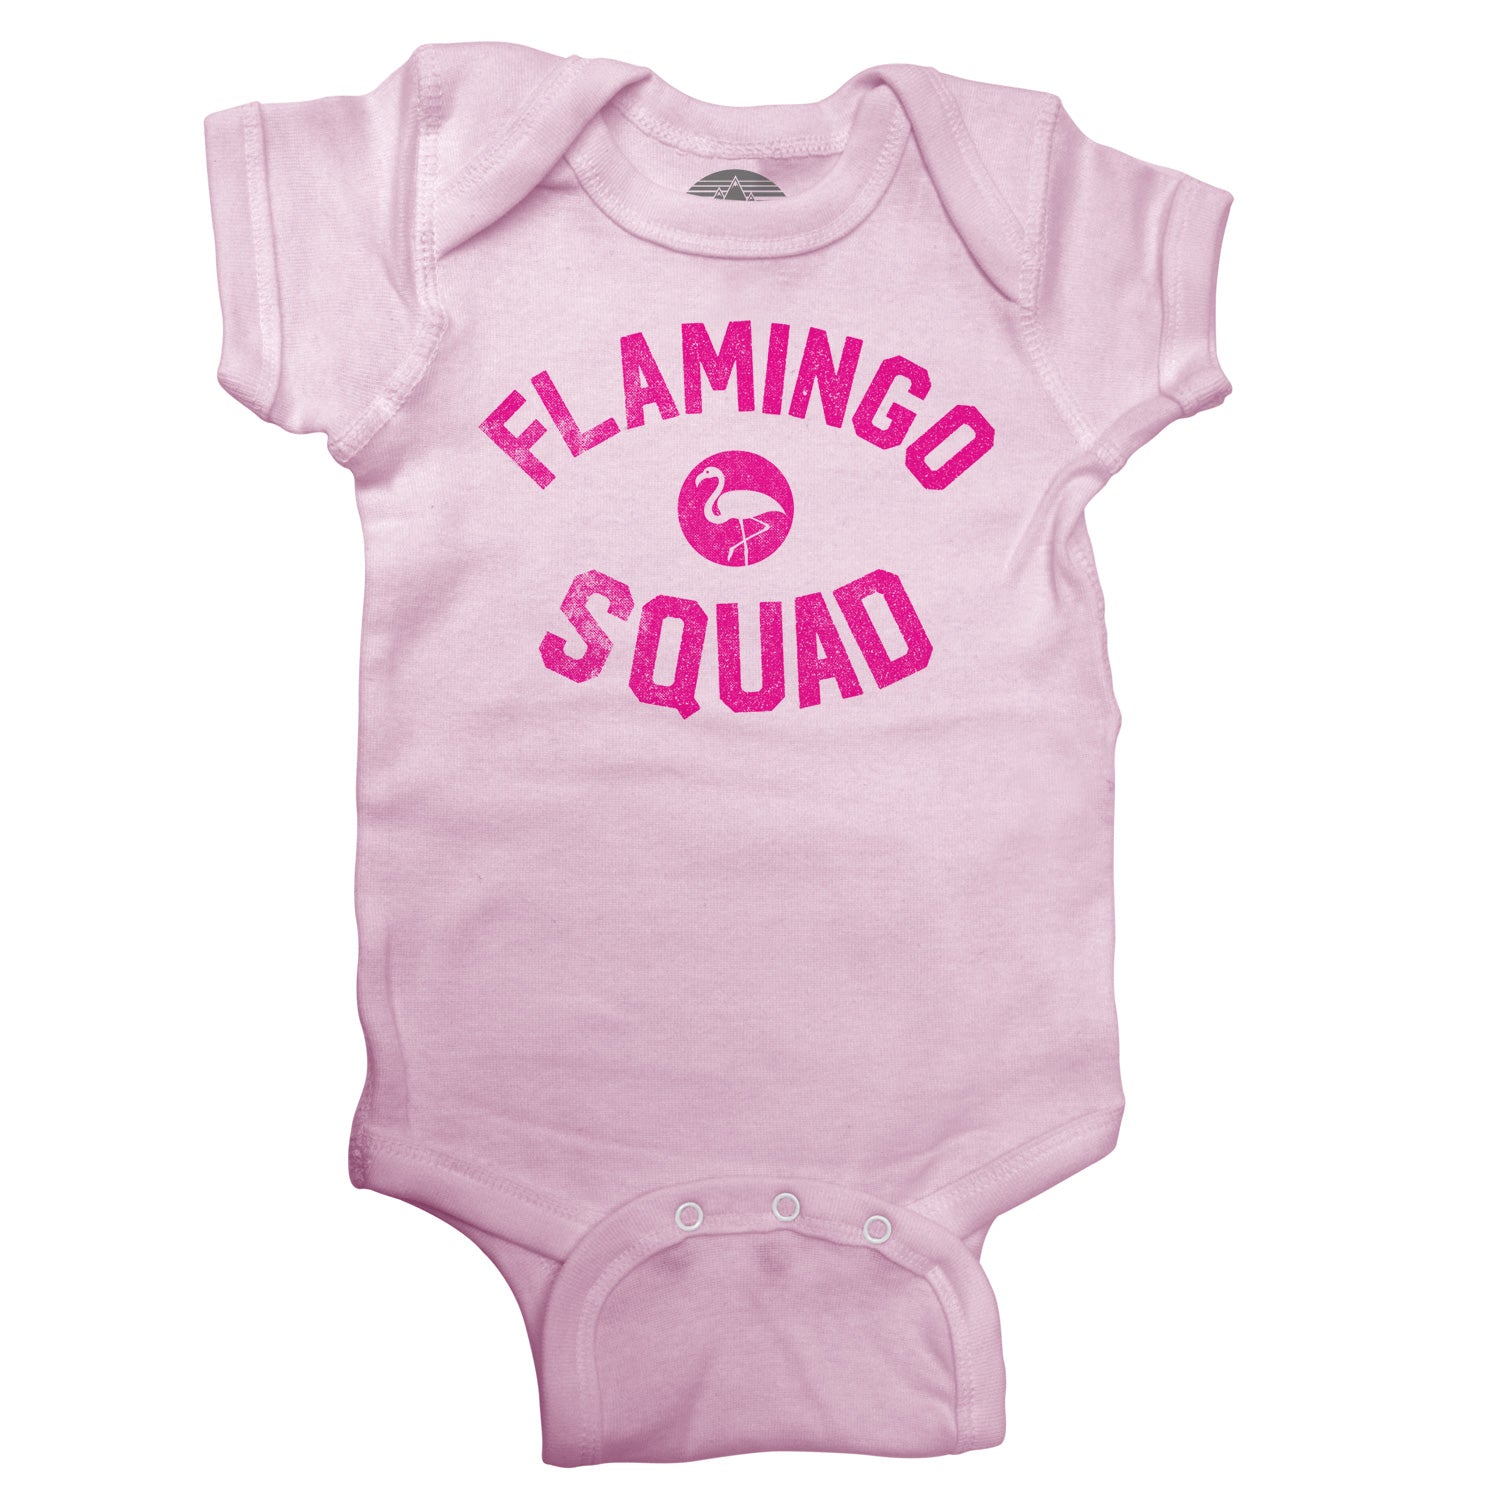 Flamingo Squad Infant Bodysuit - Unisex Fit